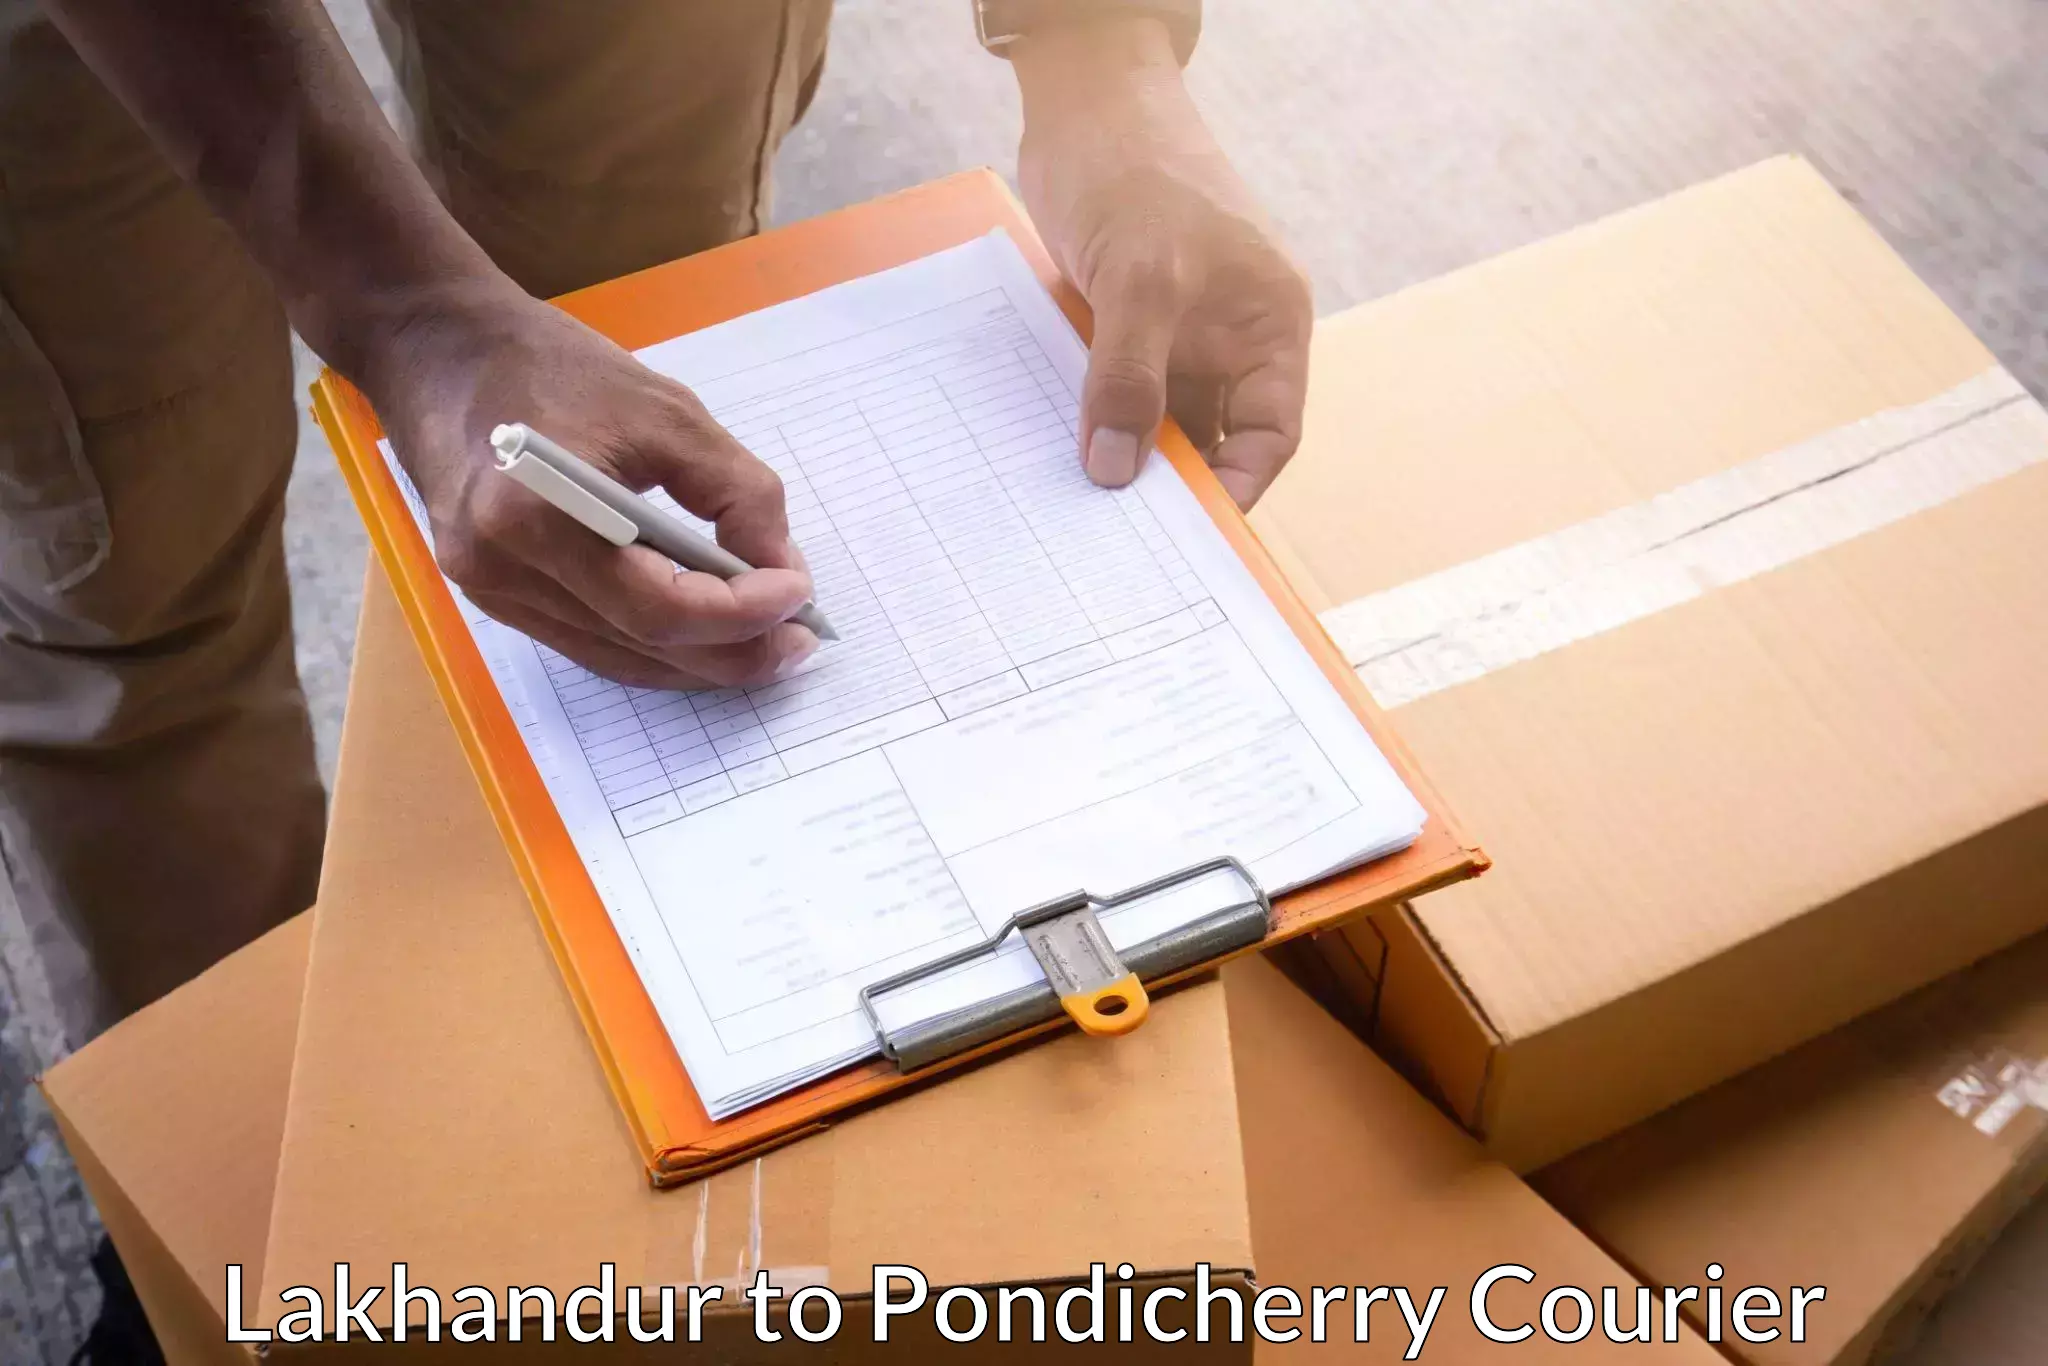 Courier service innovation Lakhandur to Karaikal